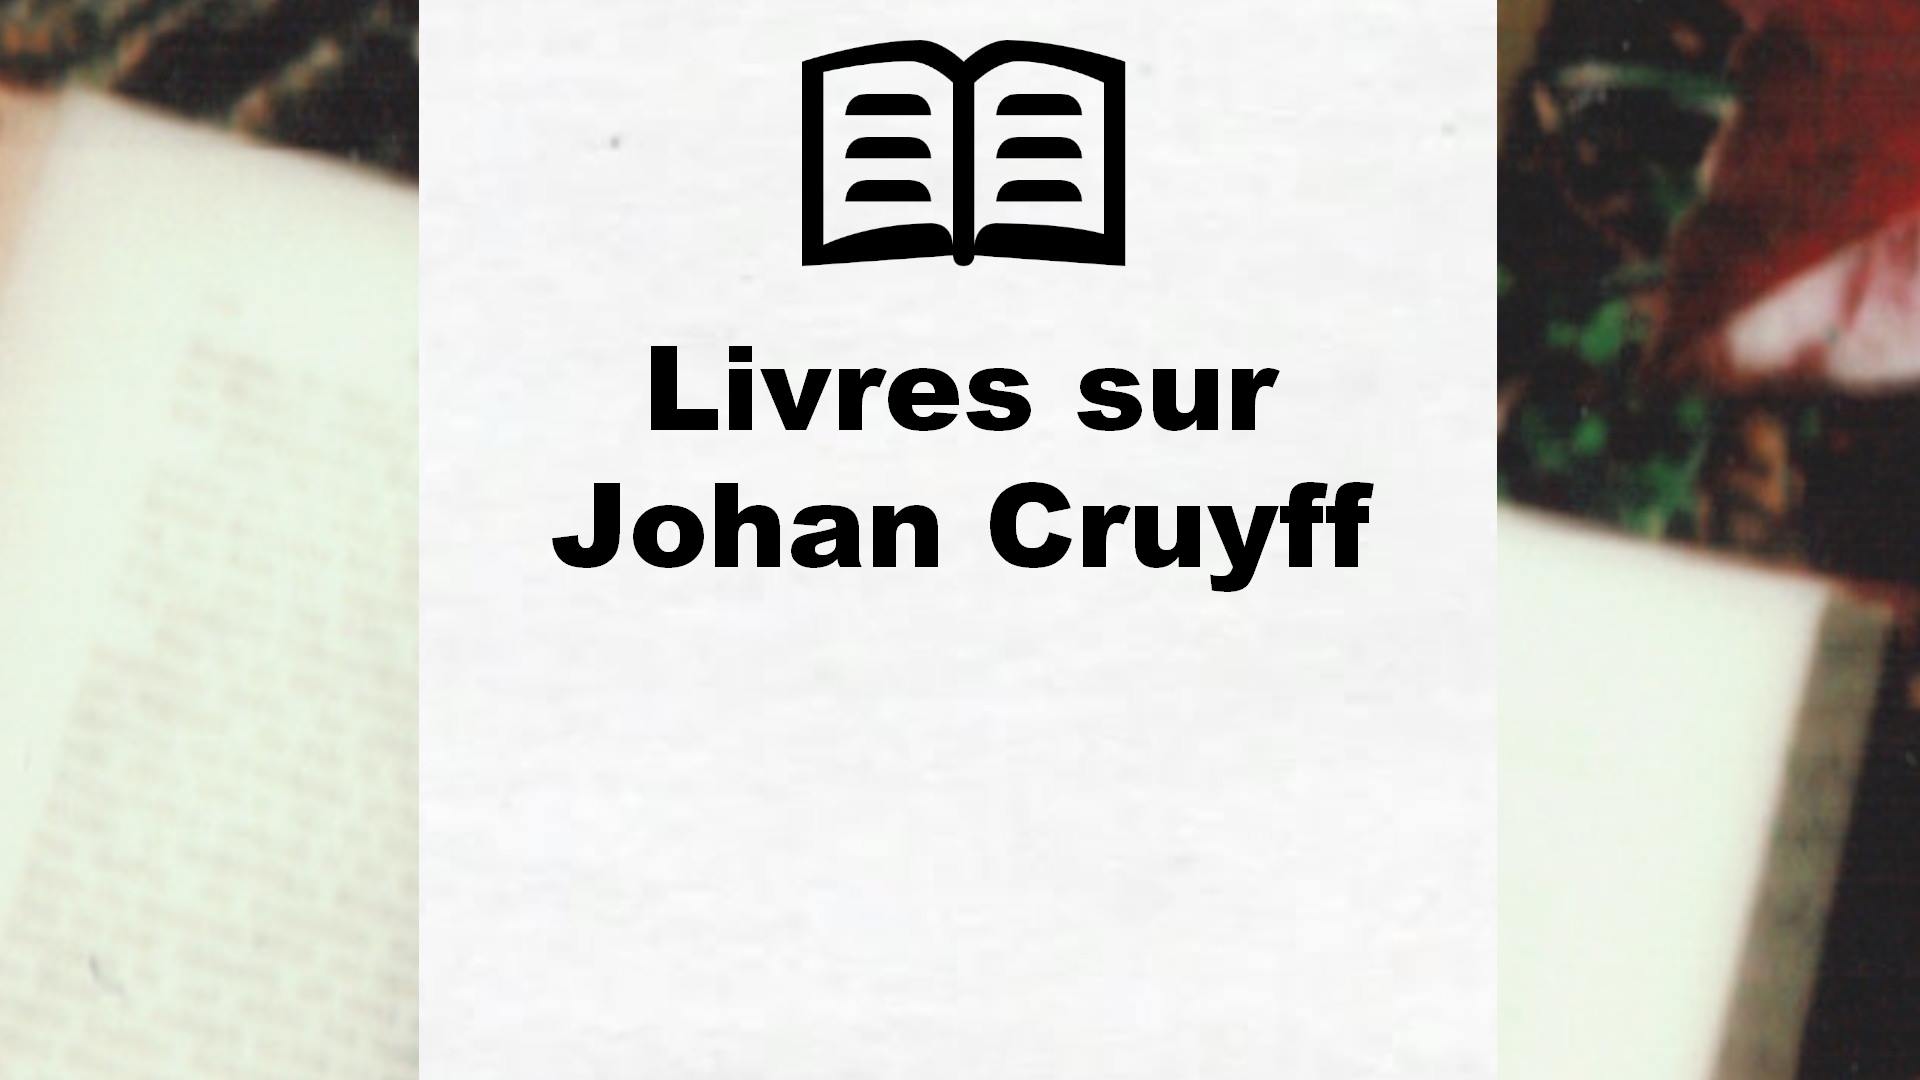 Livres sur Johan Cruyff